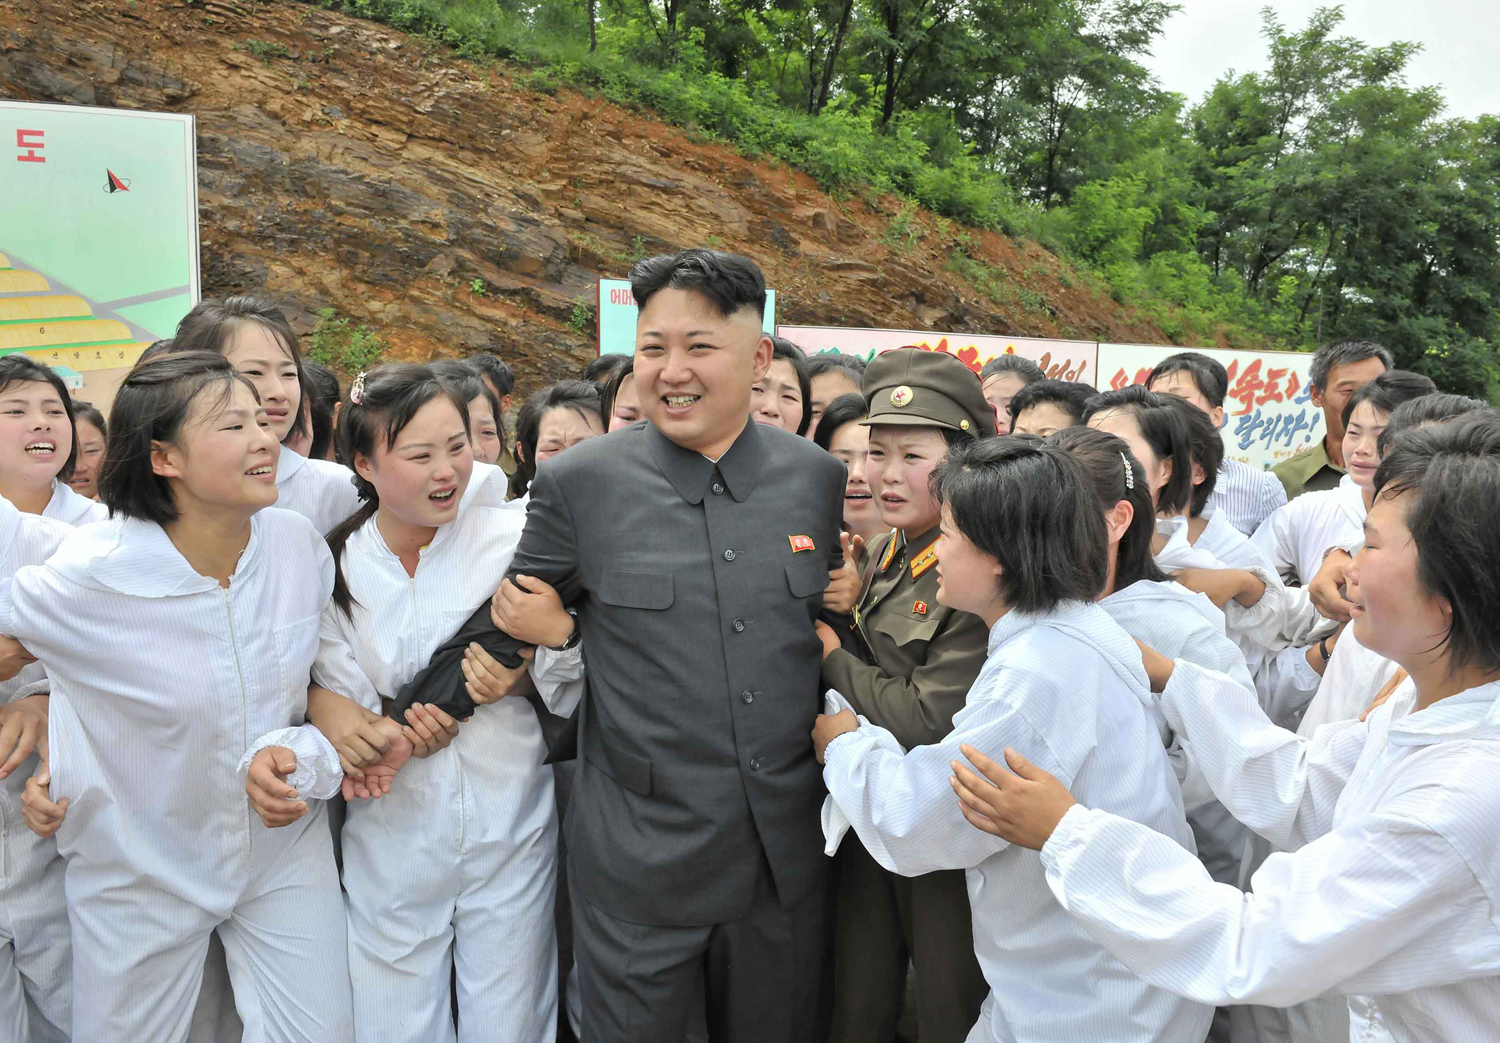 Kim Jong Un Blank Template Imgflip